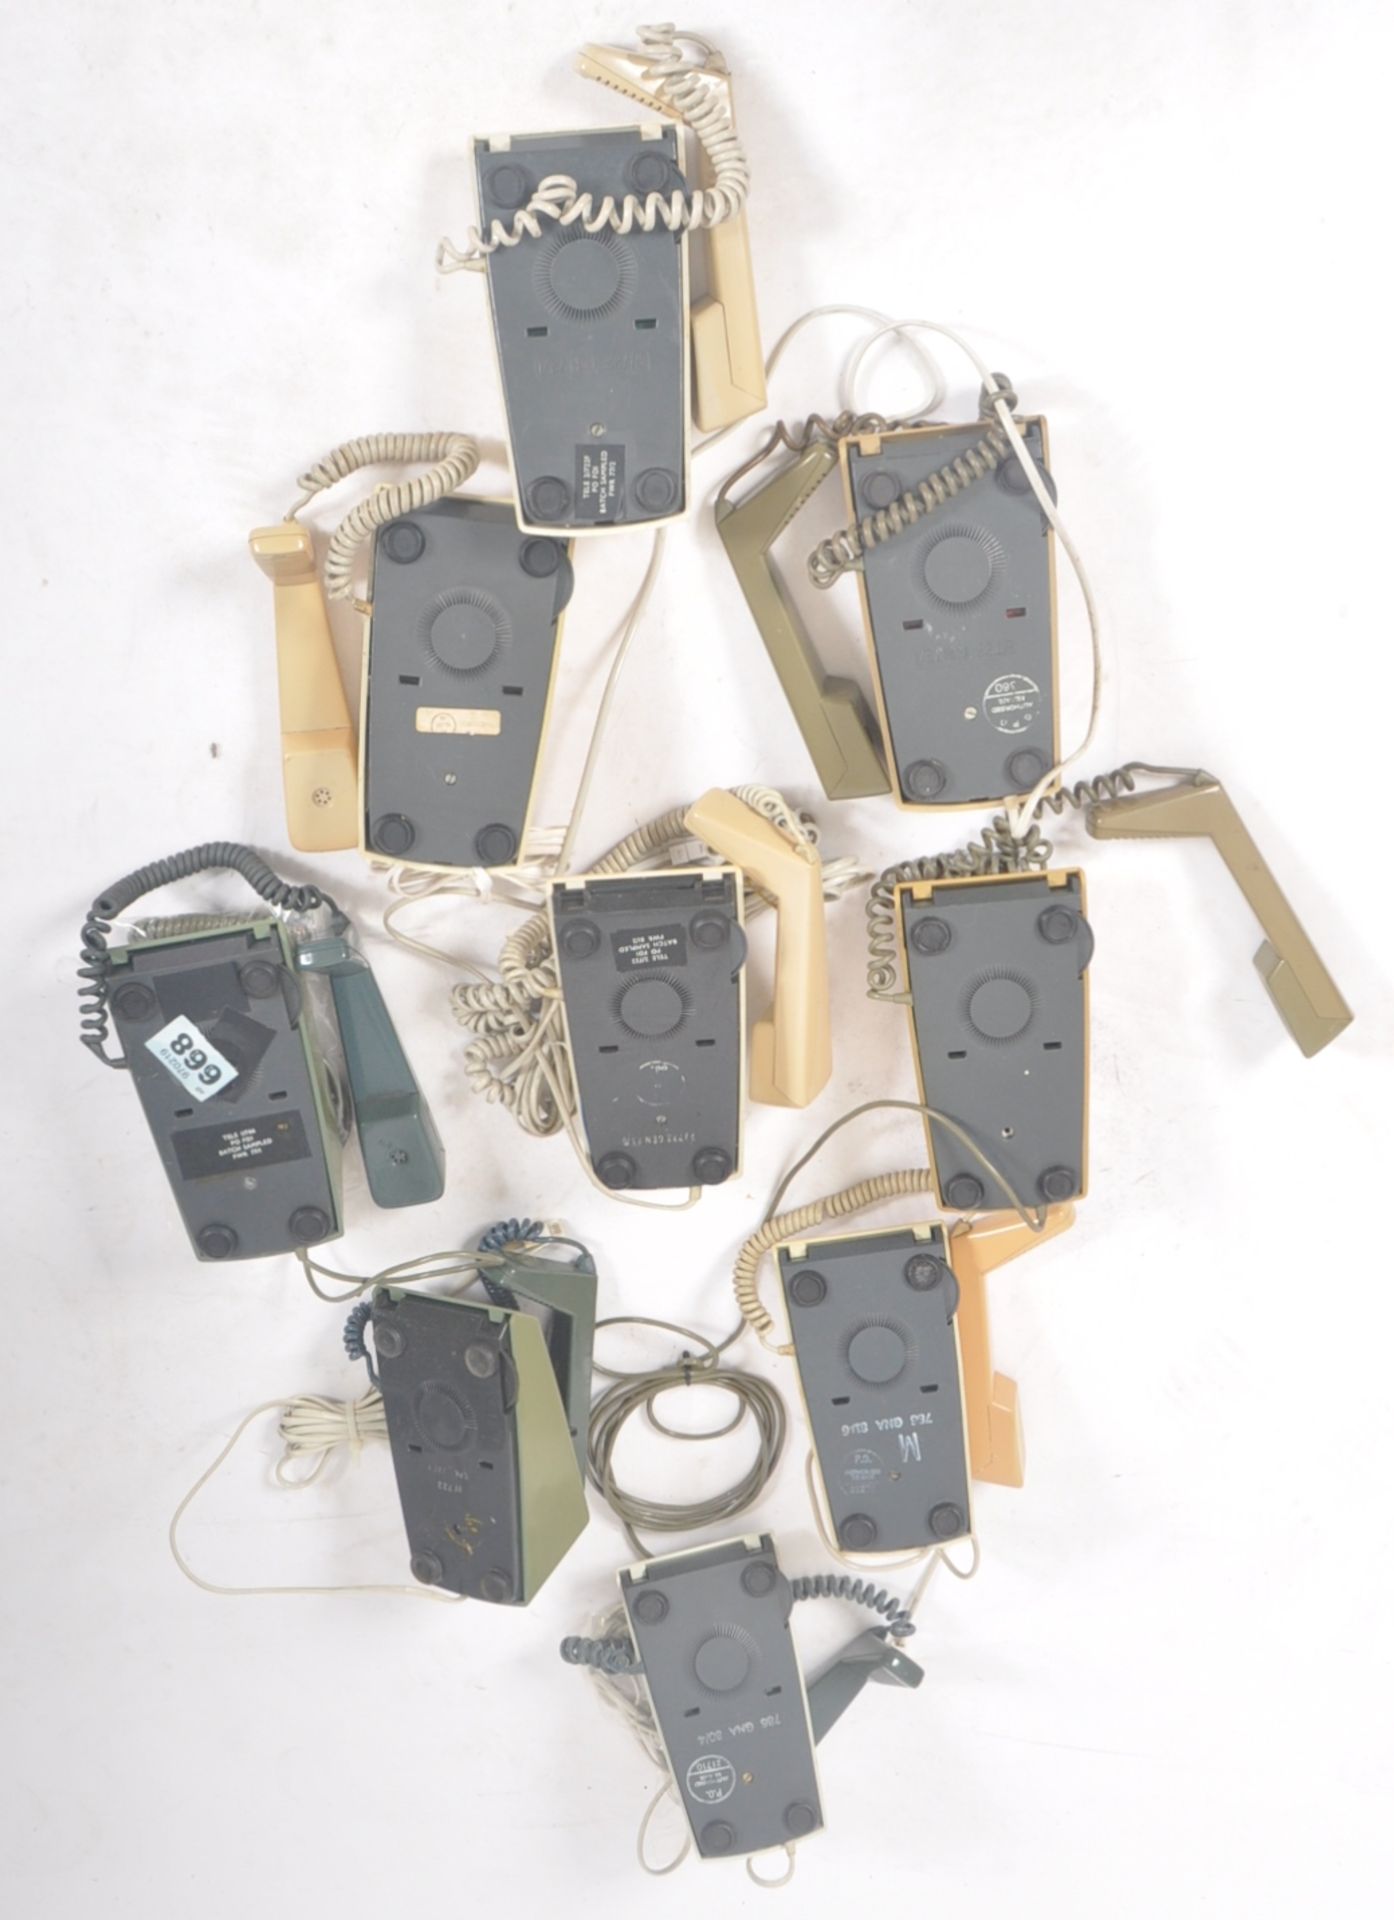 COLLECTION OF NINE VINTAGE 1970S GPO TRIMBONE TELEPHONES - Image 8 of 9